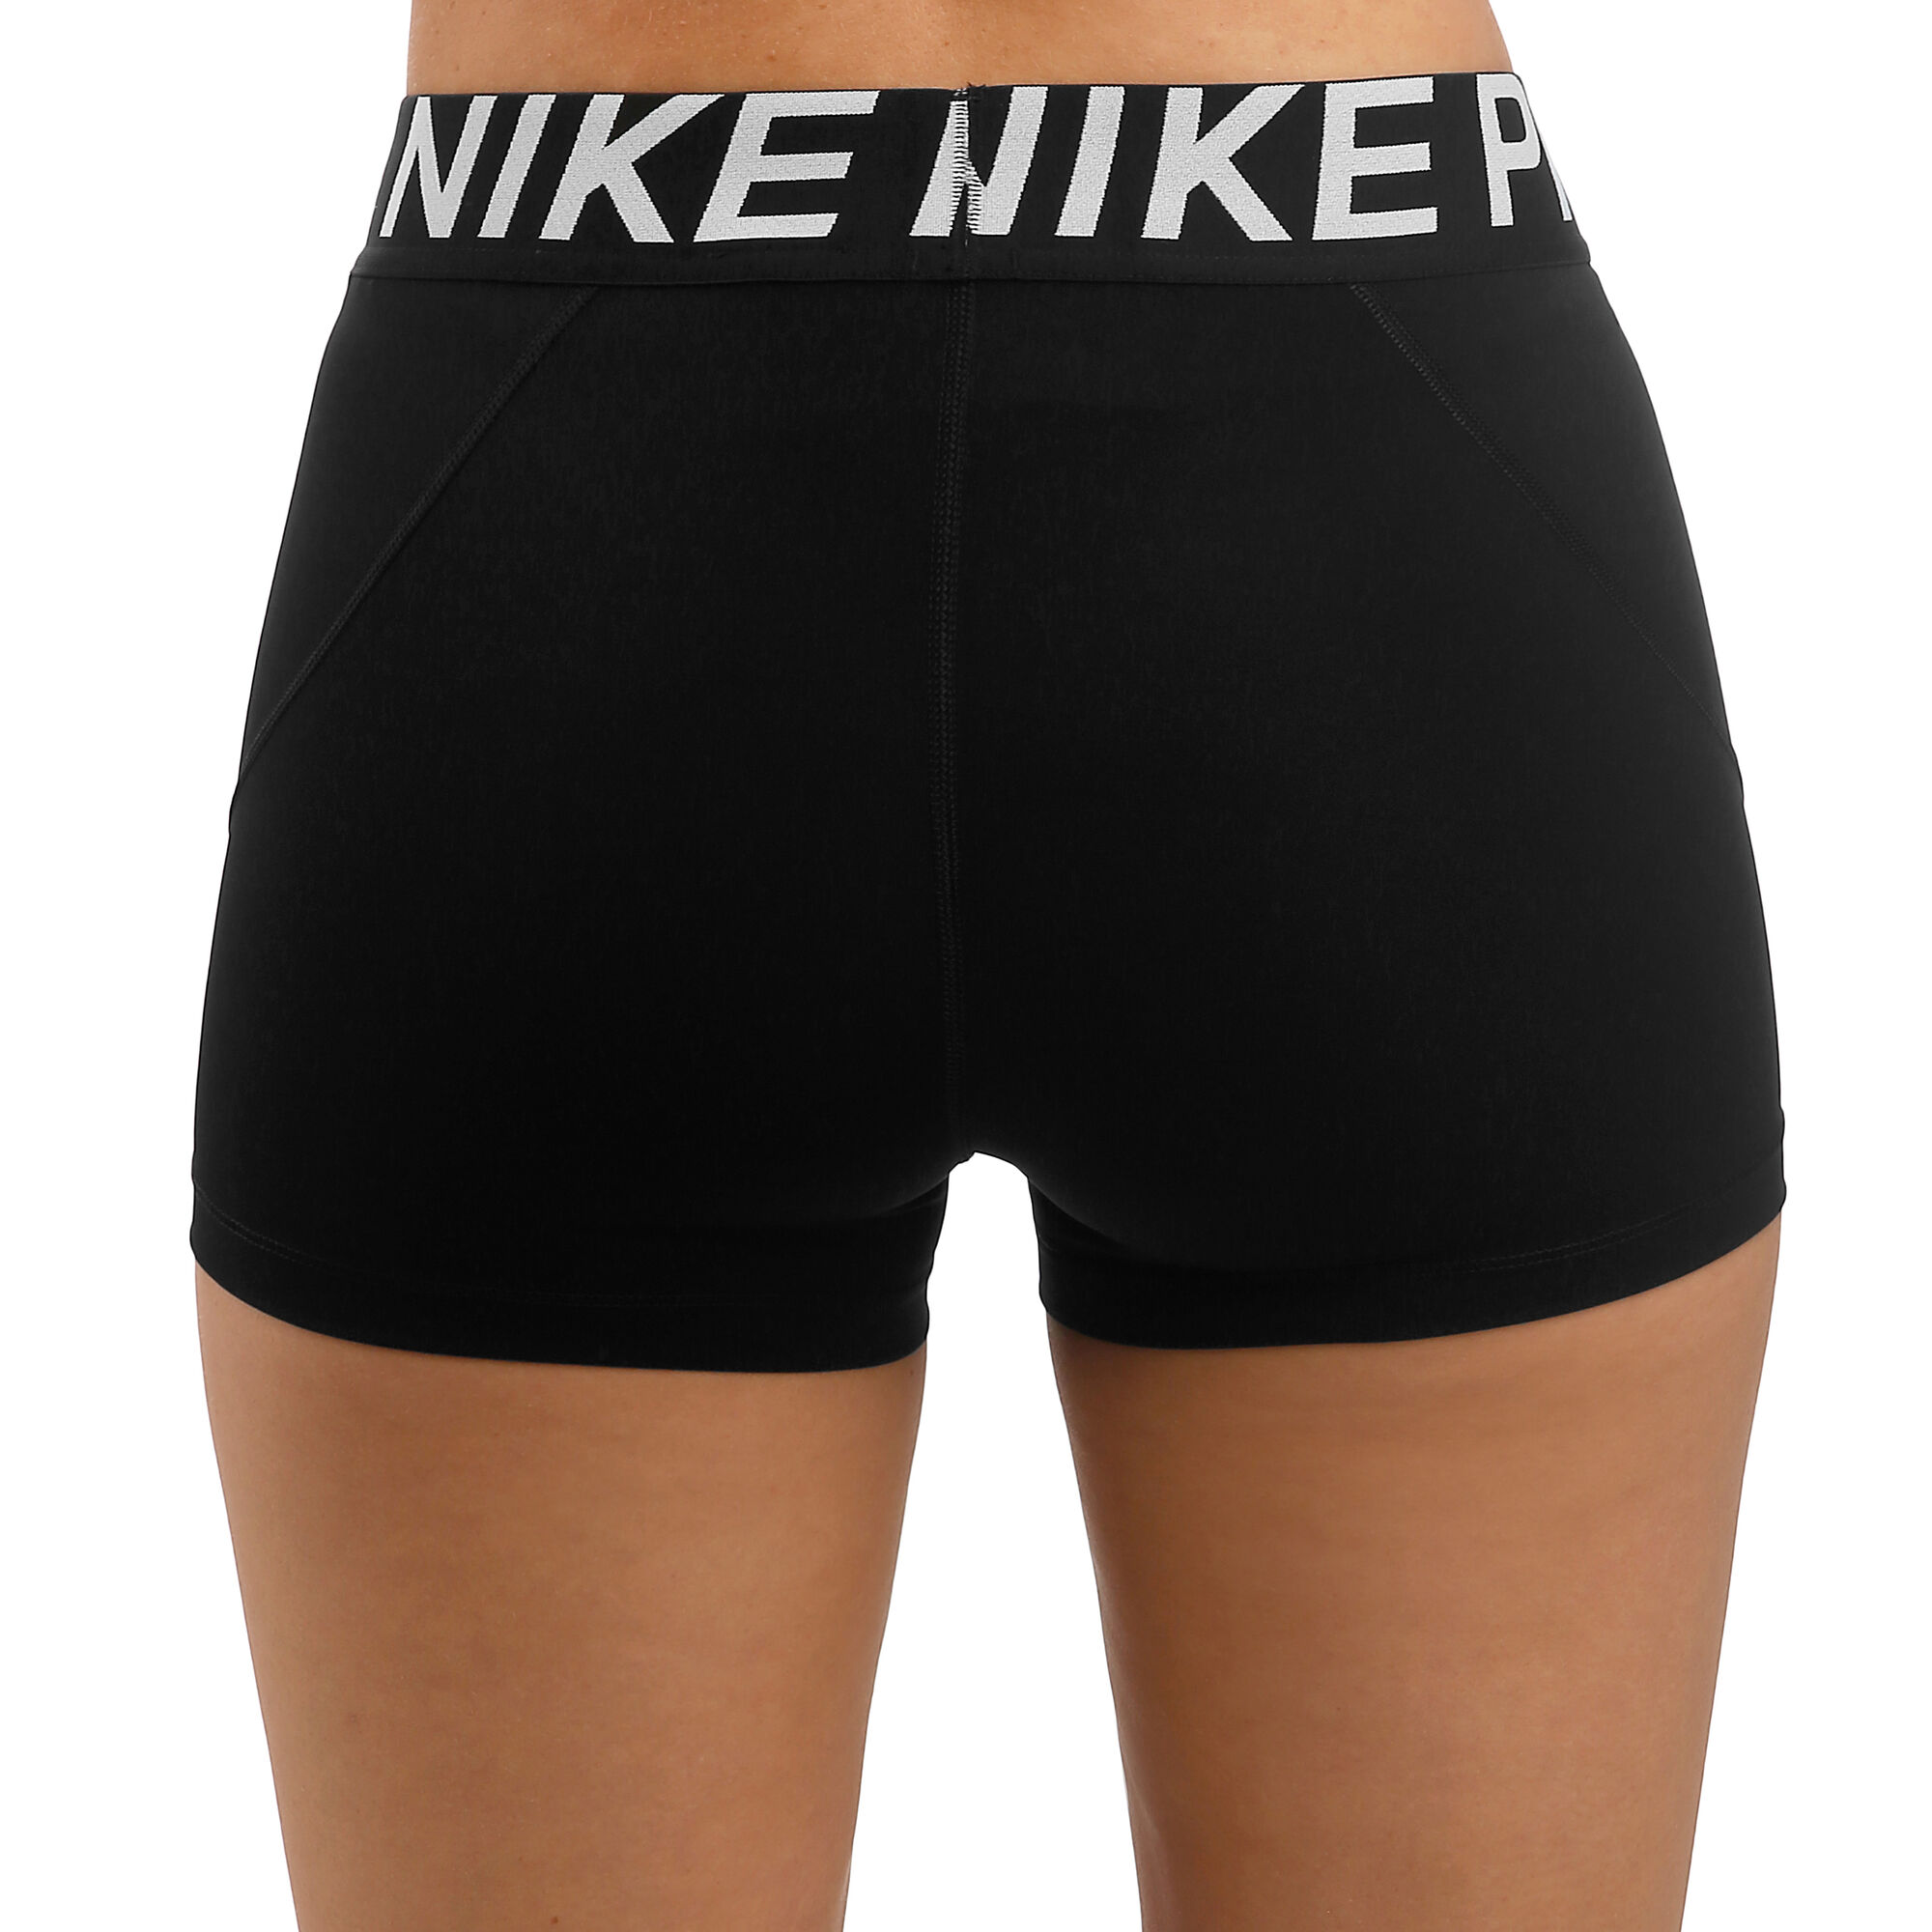 Nike Shorts Con Bolsillo Para Mujeres - Negro, Blanco online Tennis-Point